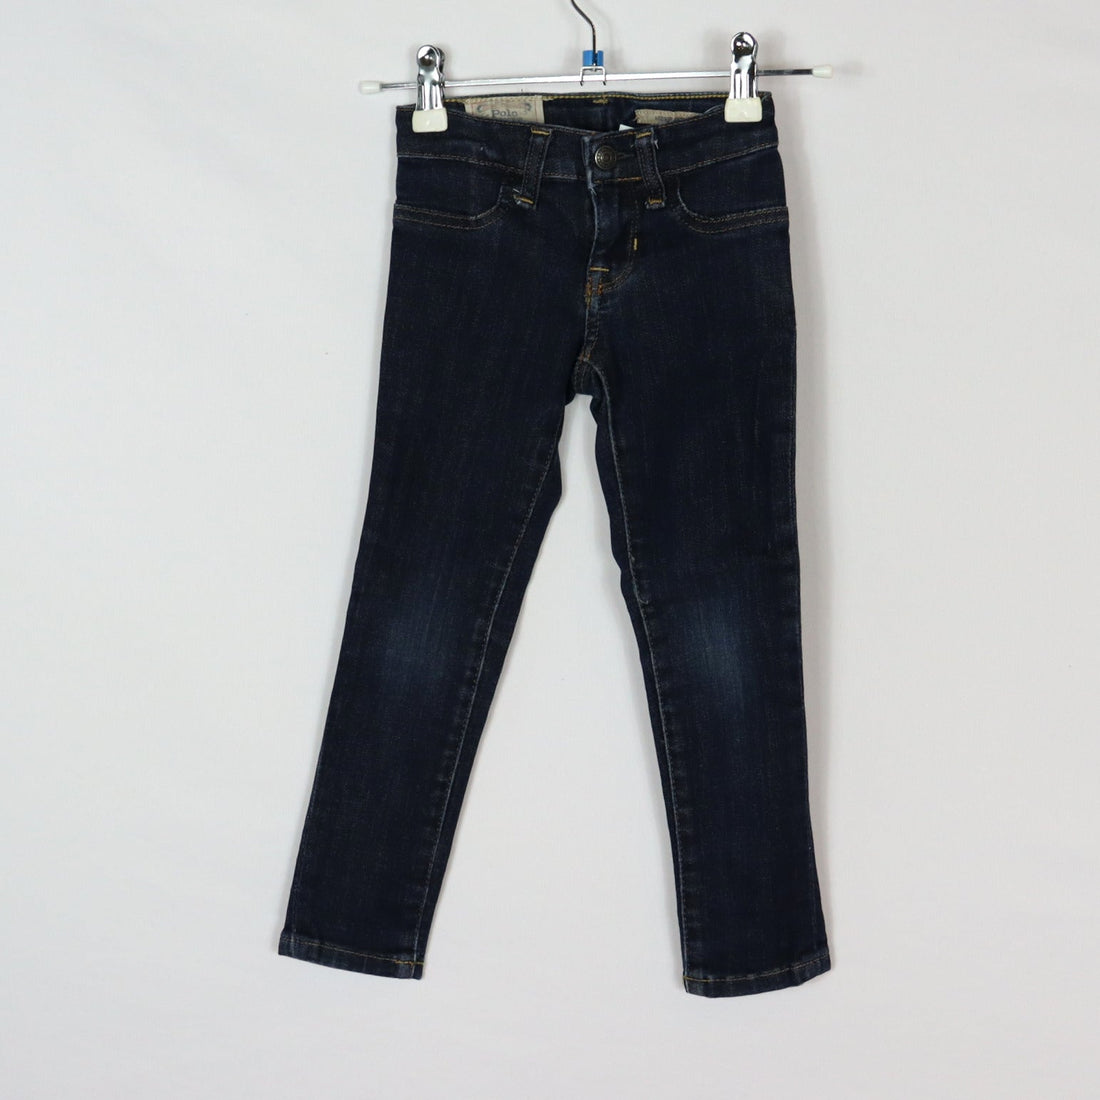 Jeans - Polo Ralph Lauren - 104 - dunkelblau - Girl - sehr guter Zustand